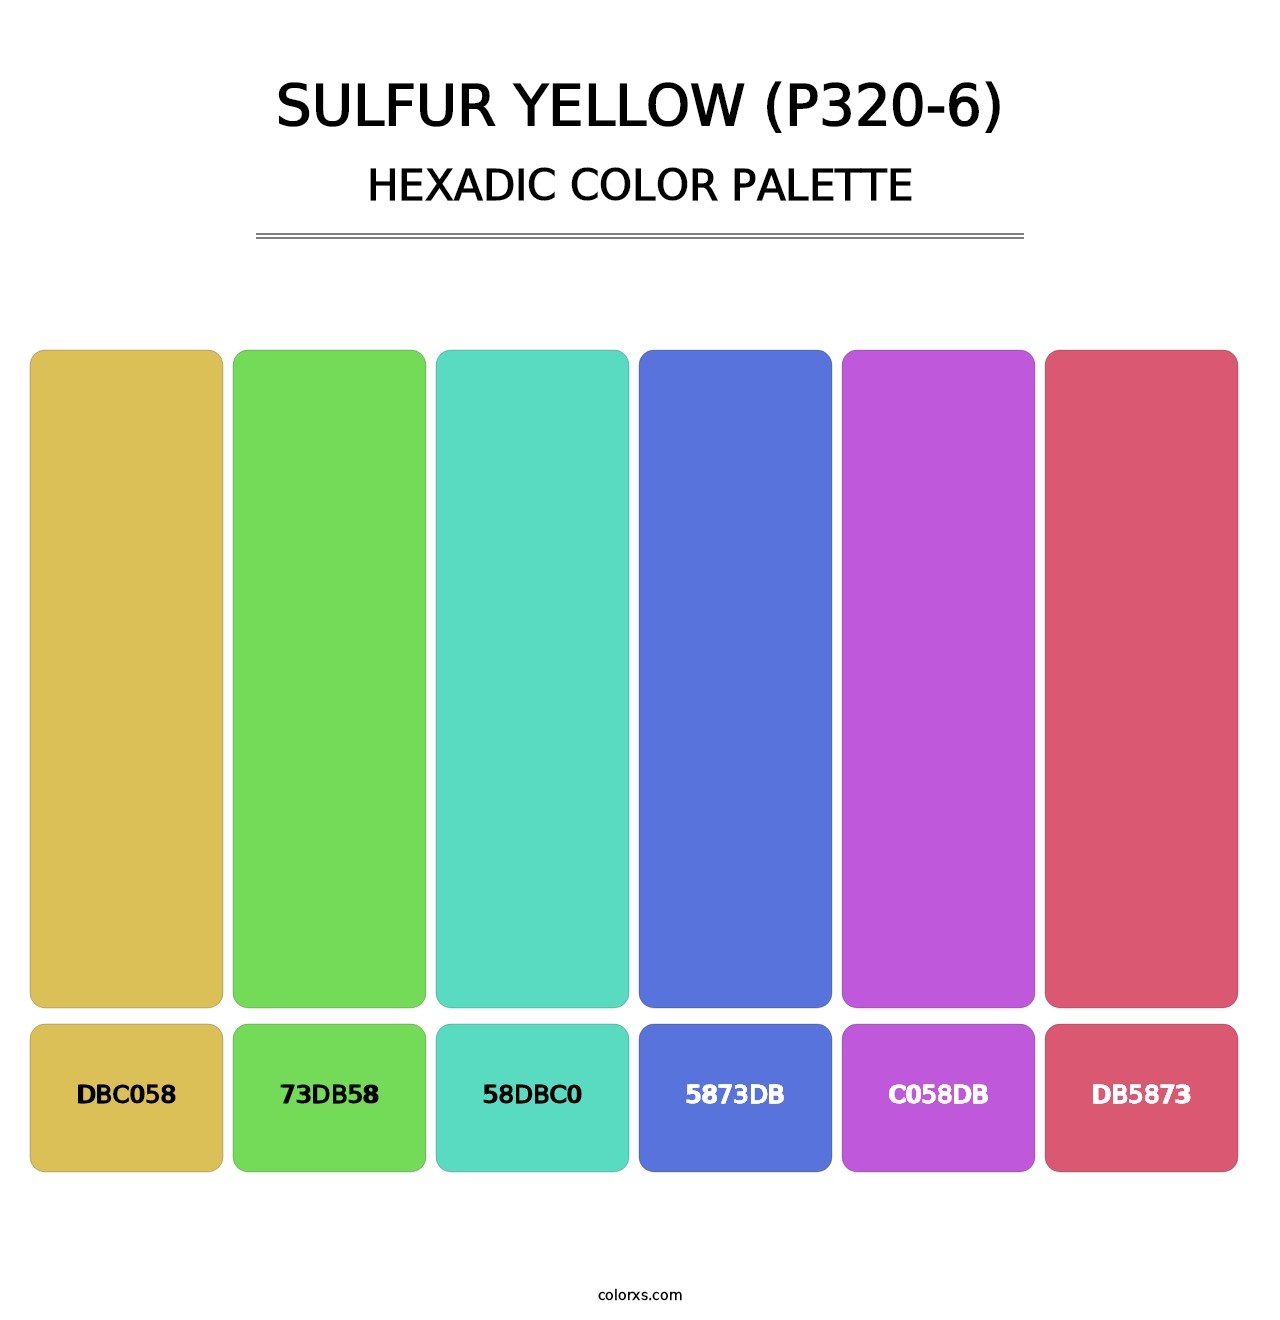 Sulfur Yellow (P320-6) - Hexadic Color Palette